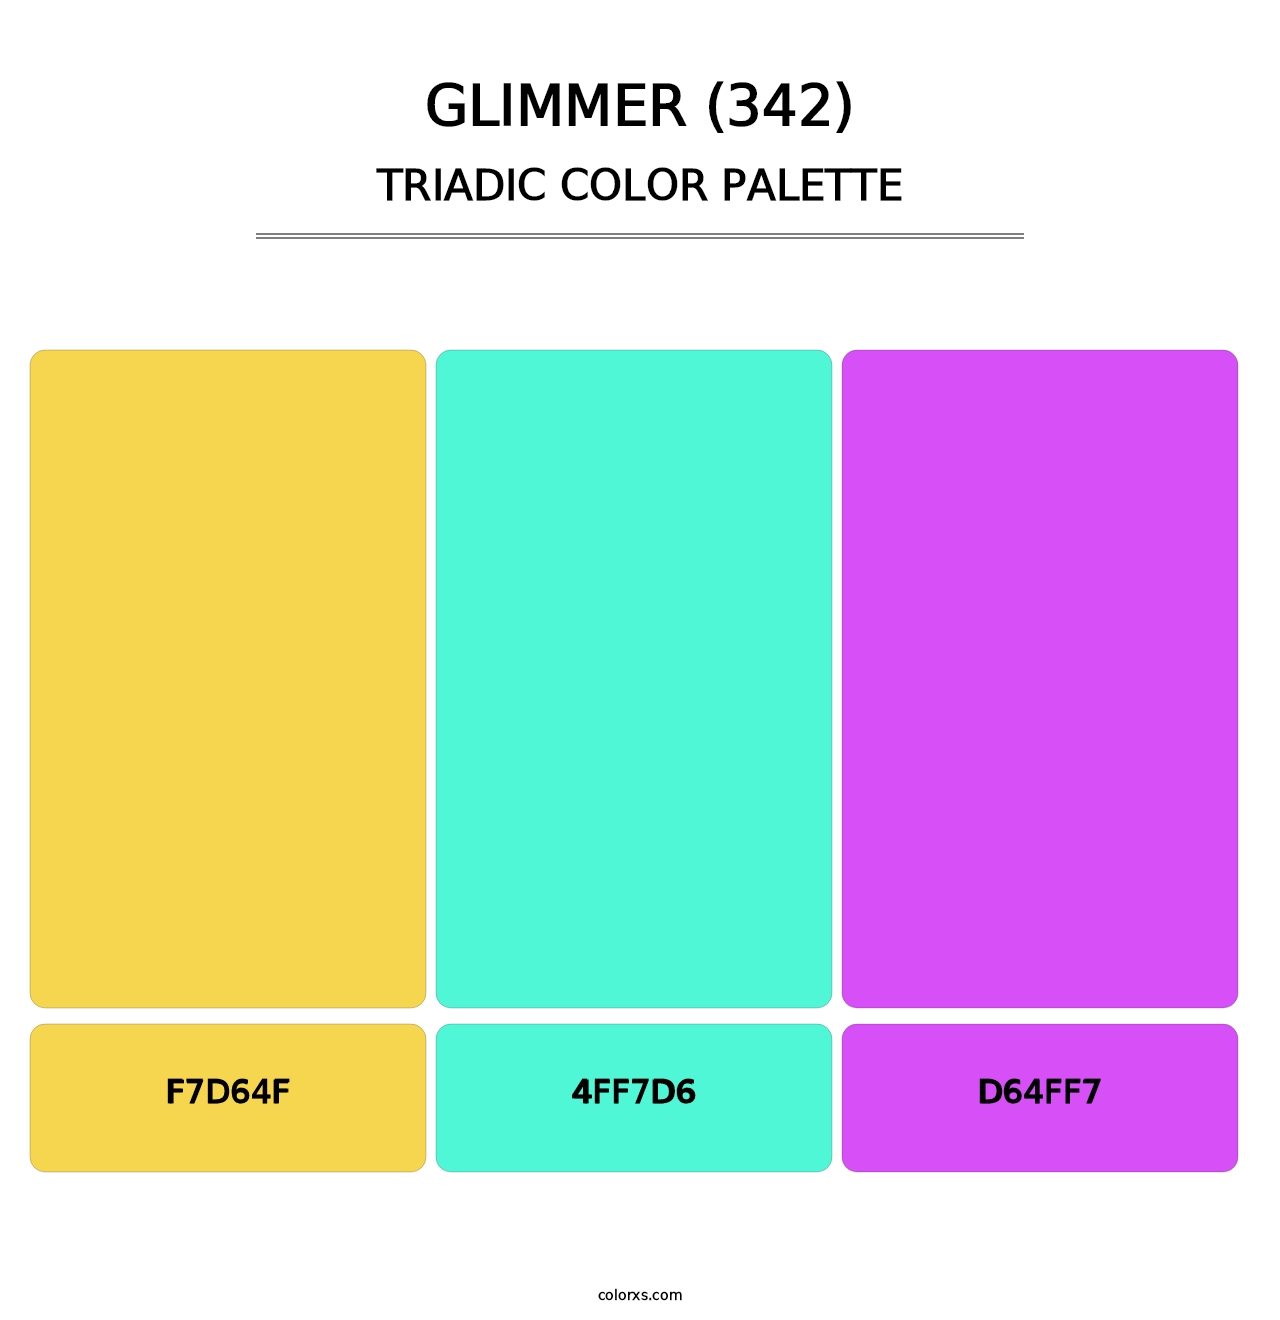 Glimmer (342) - Triadic Color Palette